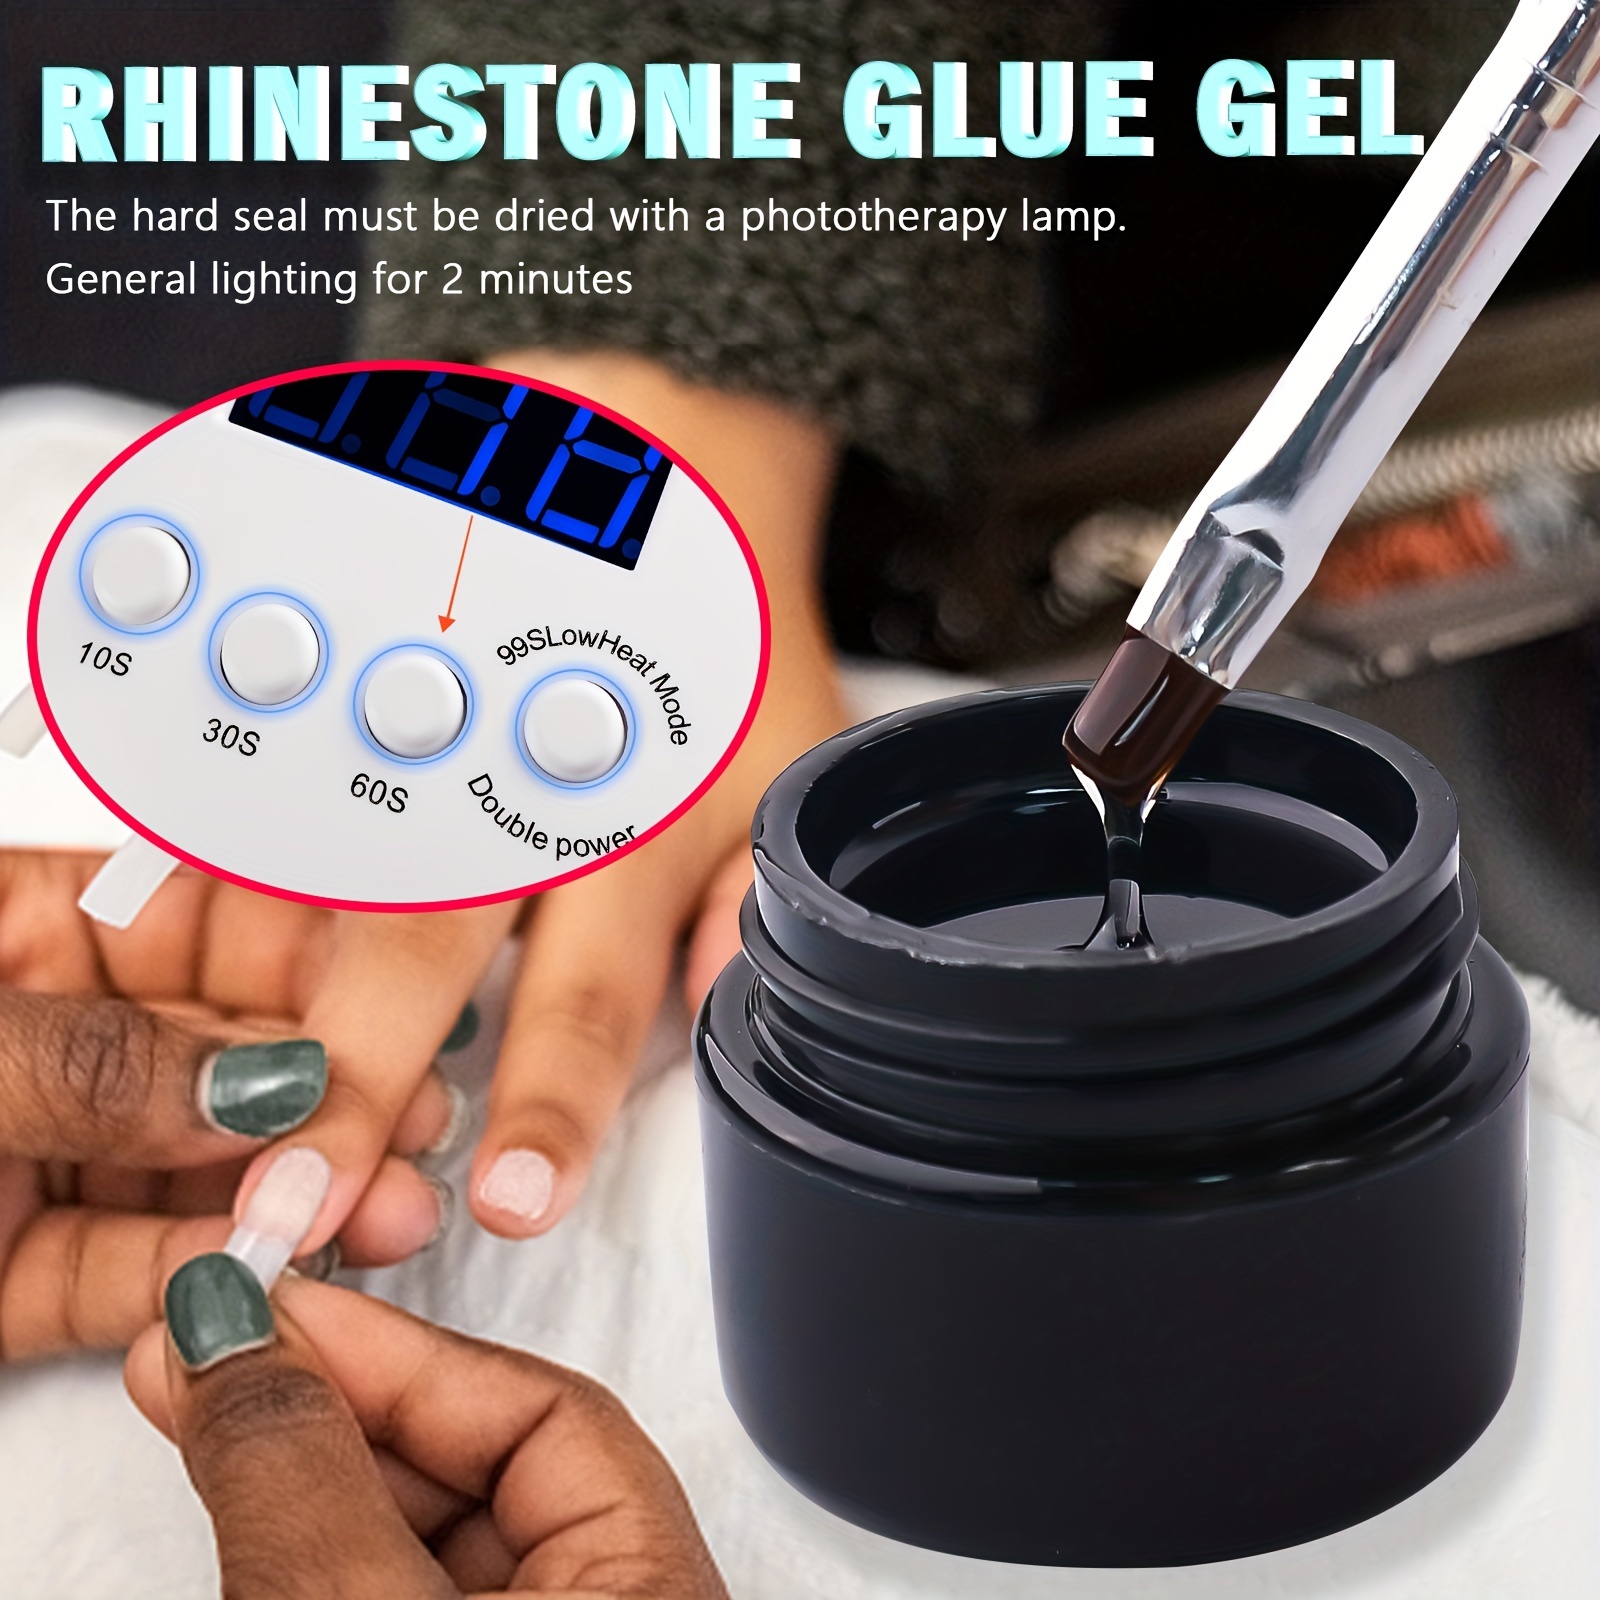 Strong Nail Art Rhinestone Glue Gel Adhesive Resin Crystal Polish Decor